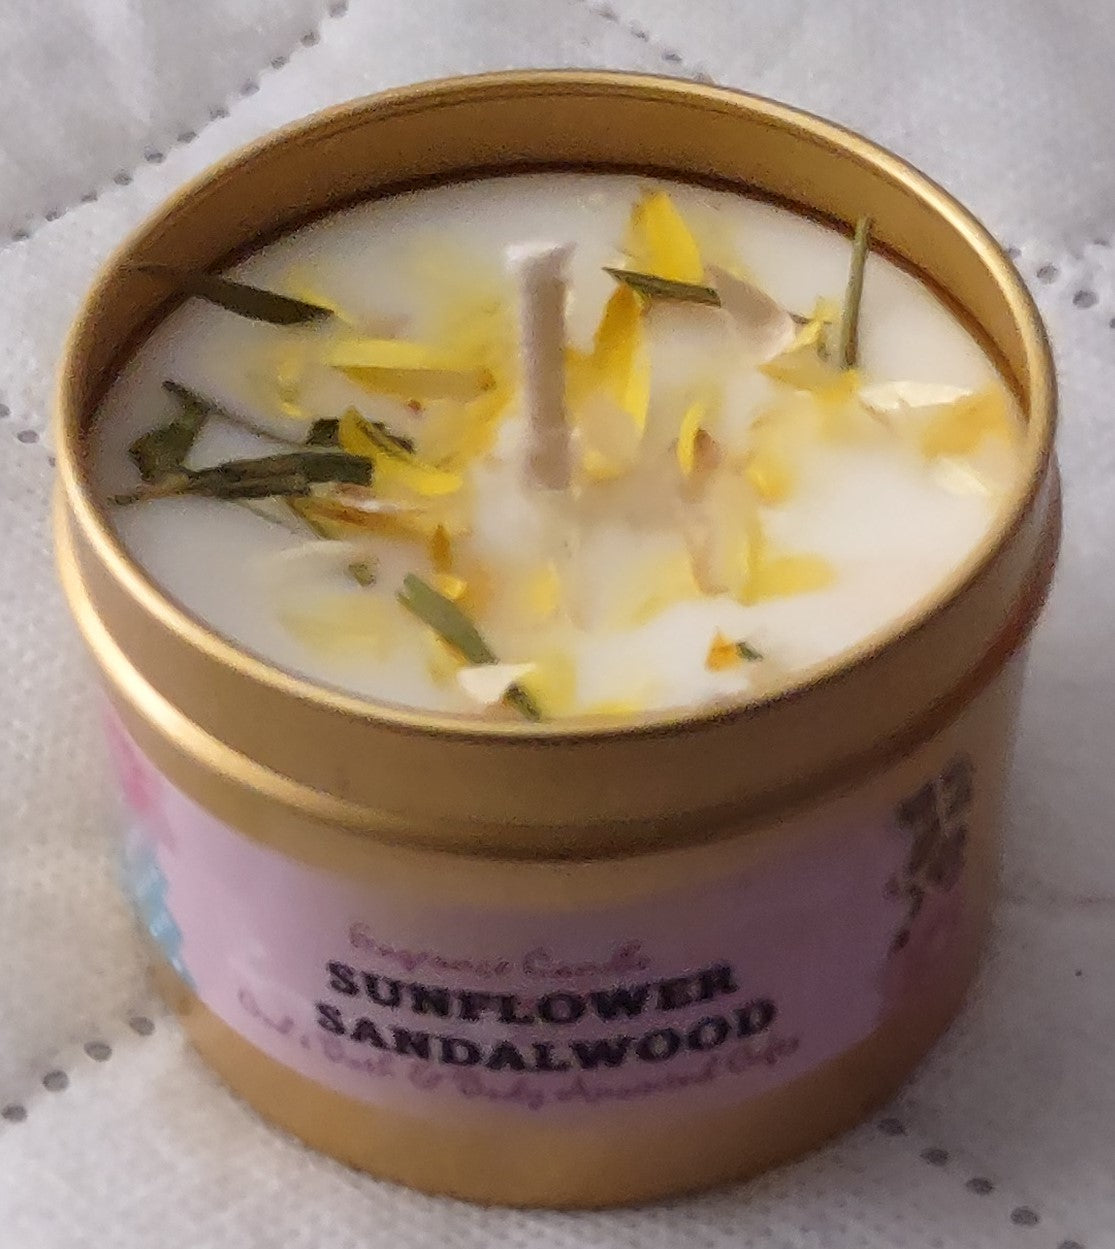 Sunflower Sandalwood - 4oz metallic tin can with lid